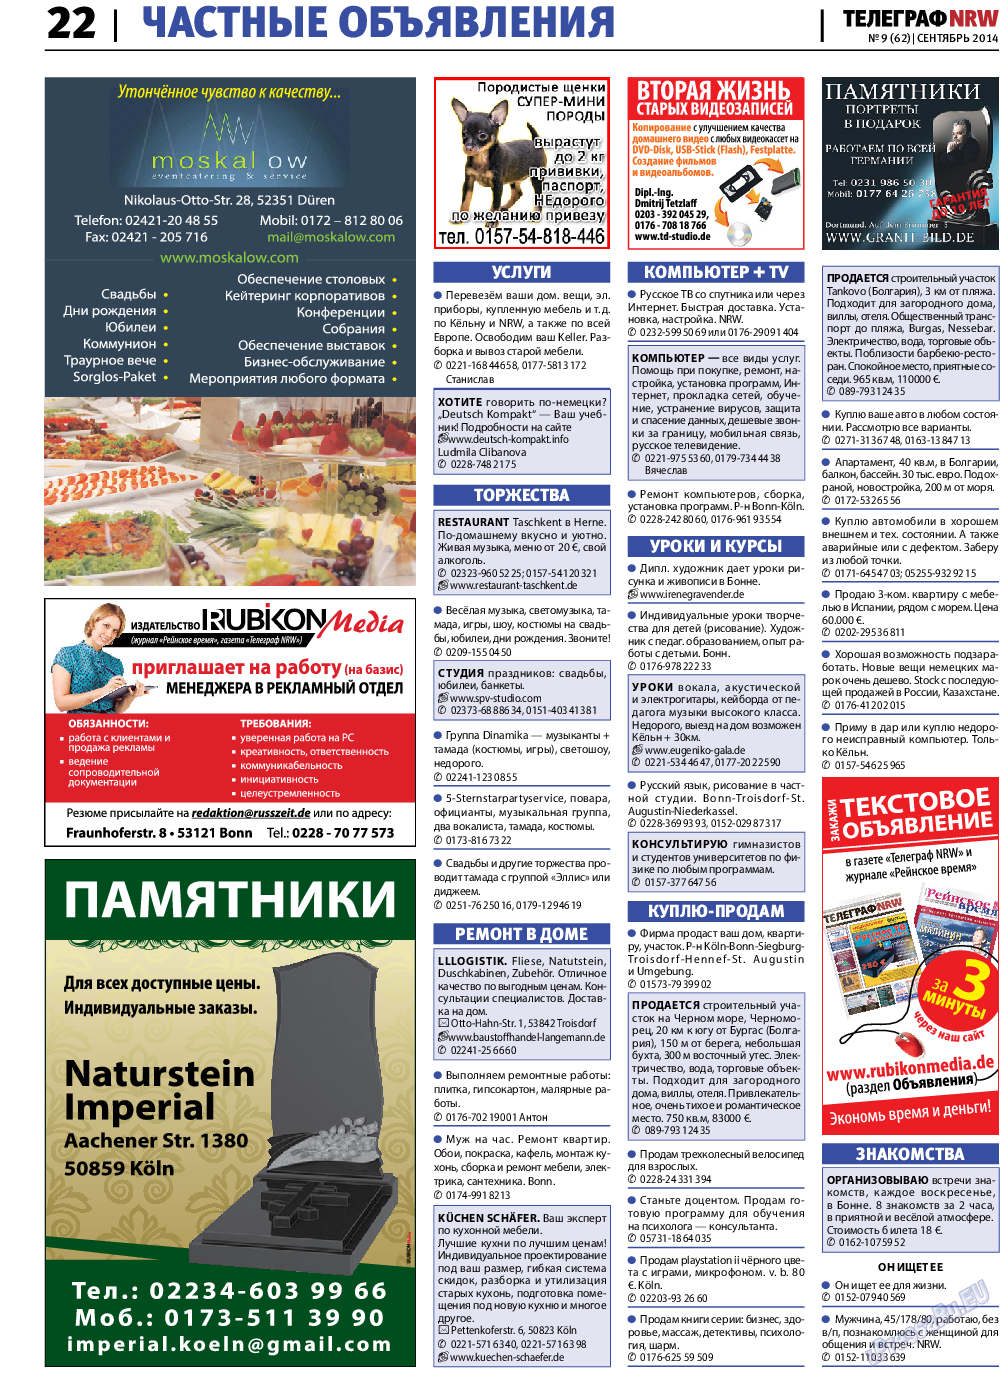 Телеграф NRW, газета. 2014 №9 стр.22